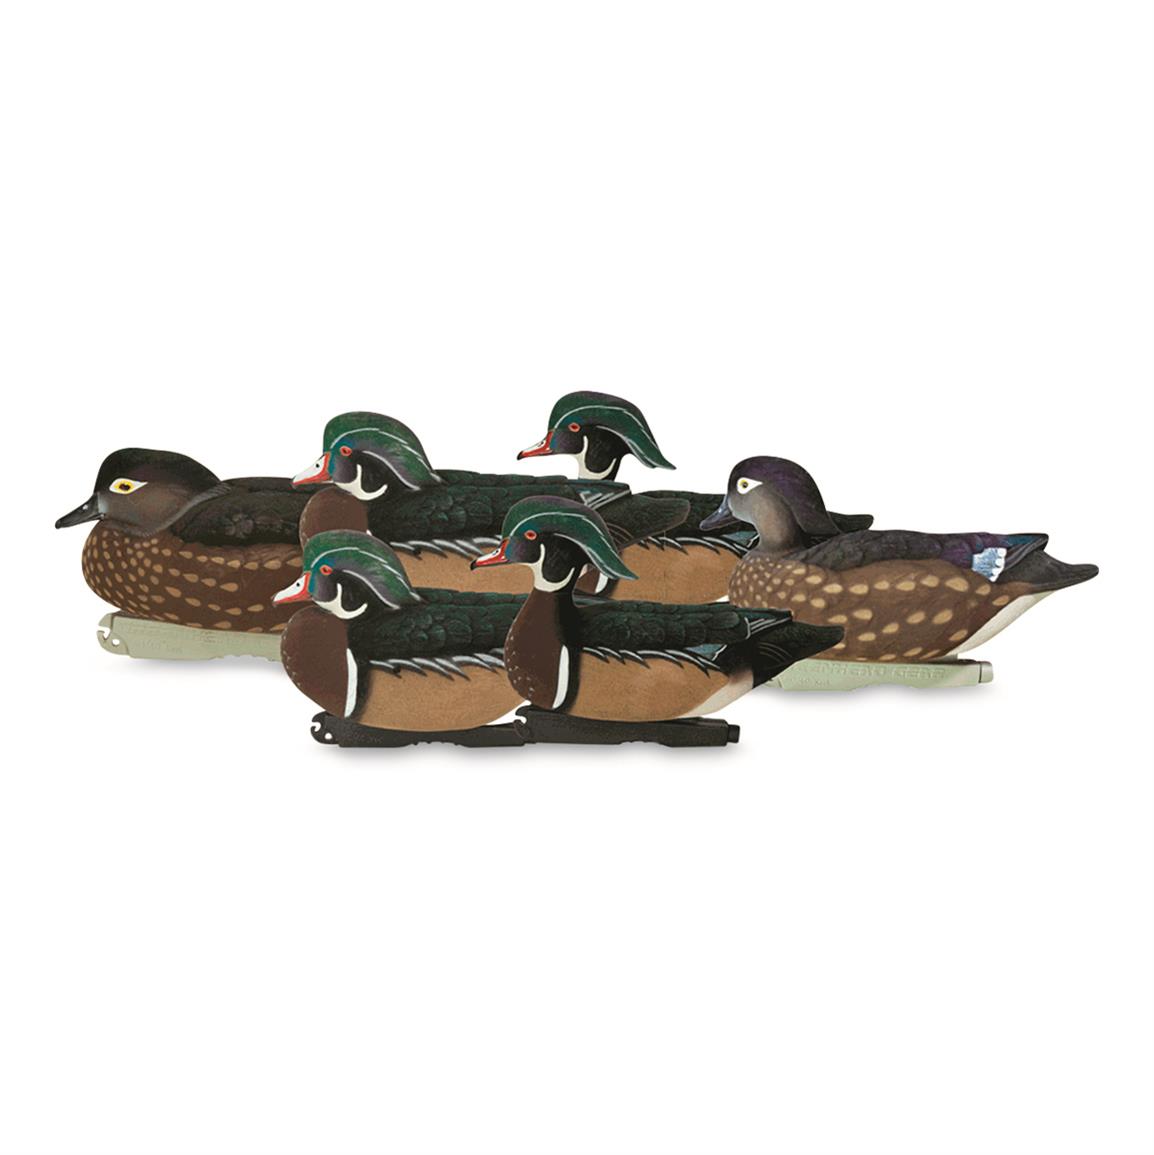 Avery GHG Pro-Grade Wood Duck Decoys, 6 Pack